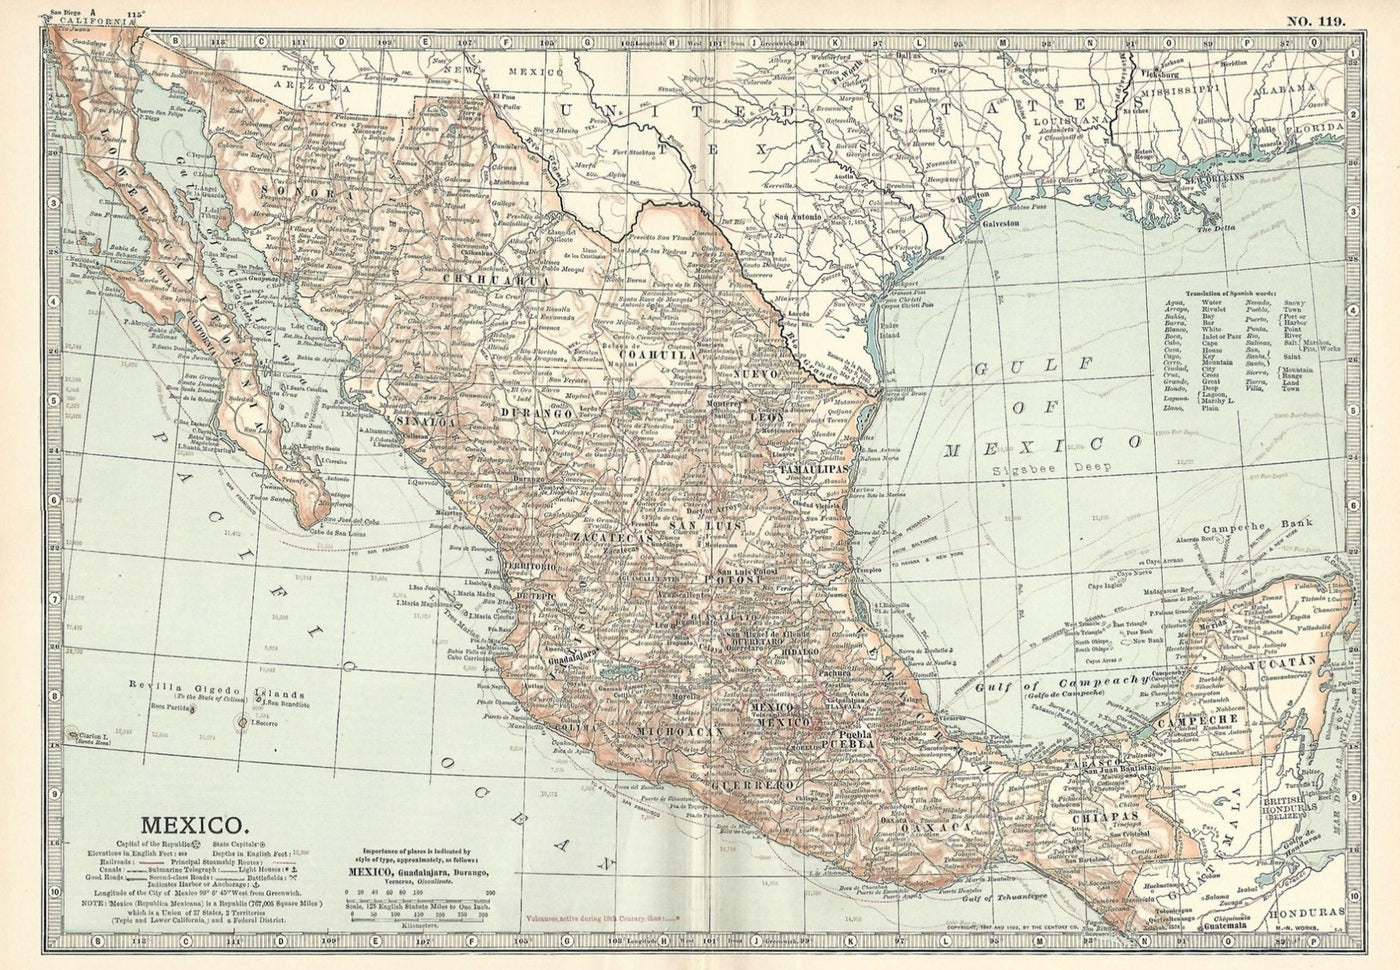 Mexico, Encyclopedia Britannica 1903